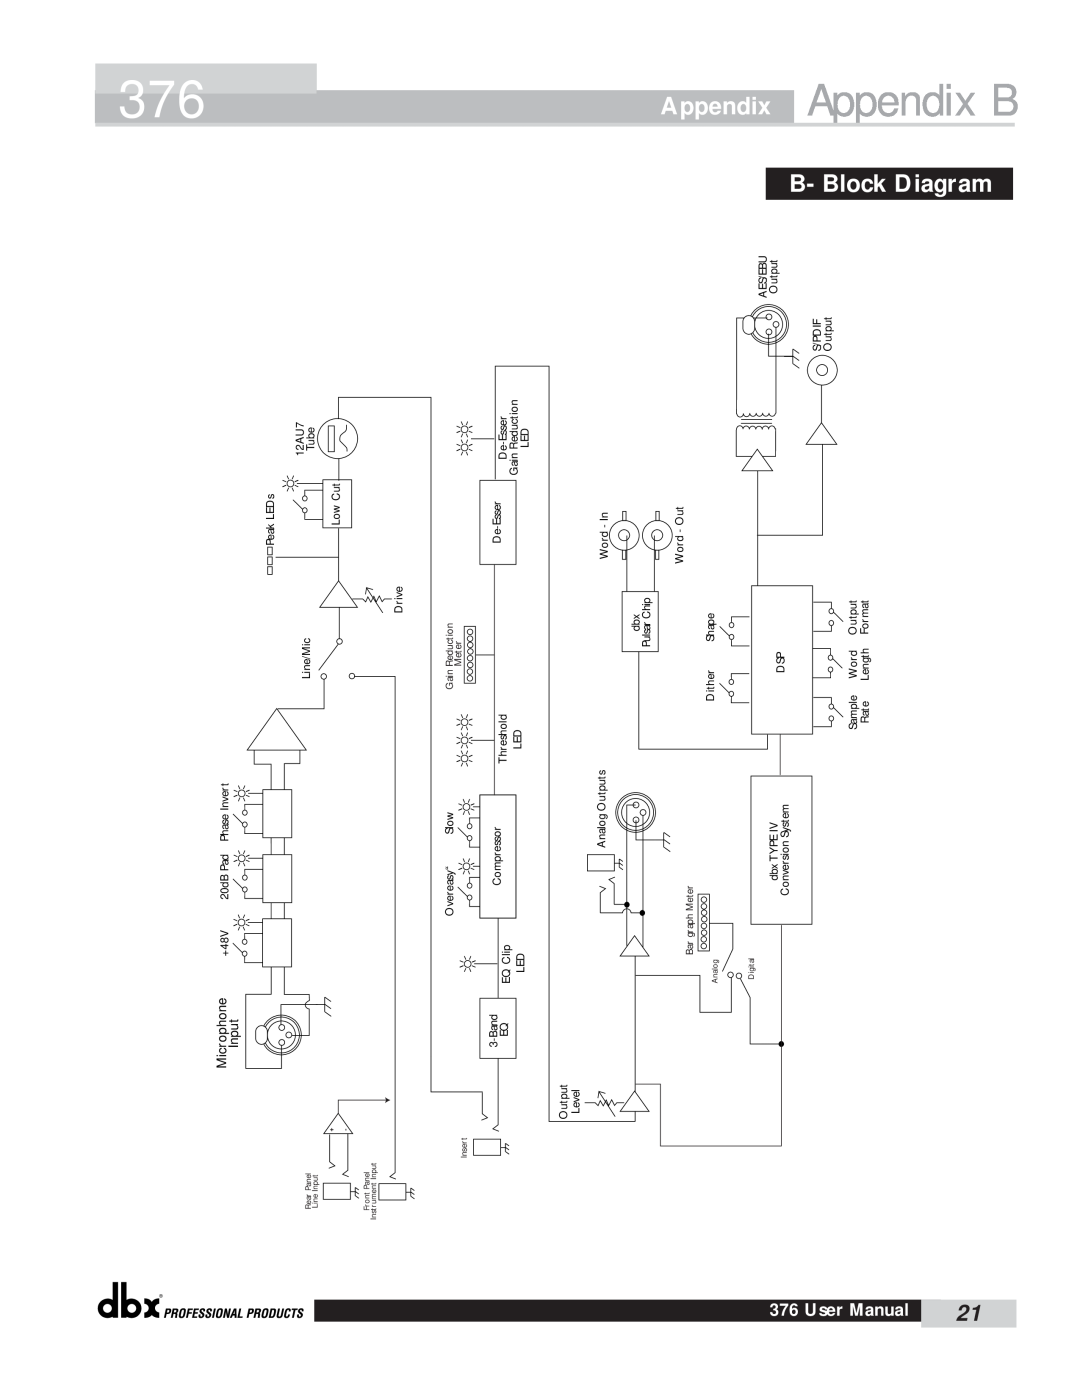 dbx Pro 376 user manual Appendix B, Block Diagram, User, Manual 